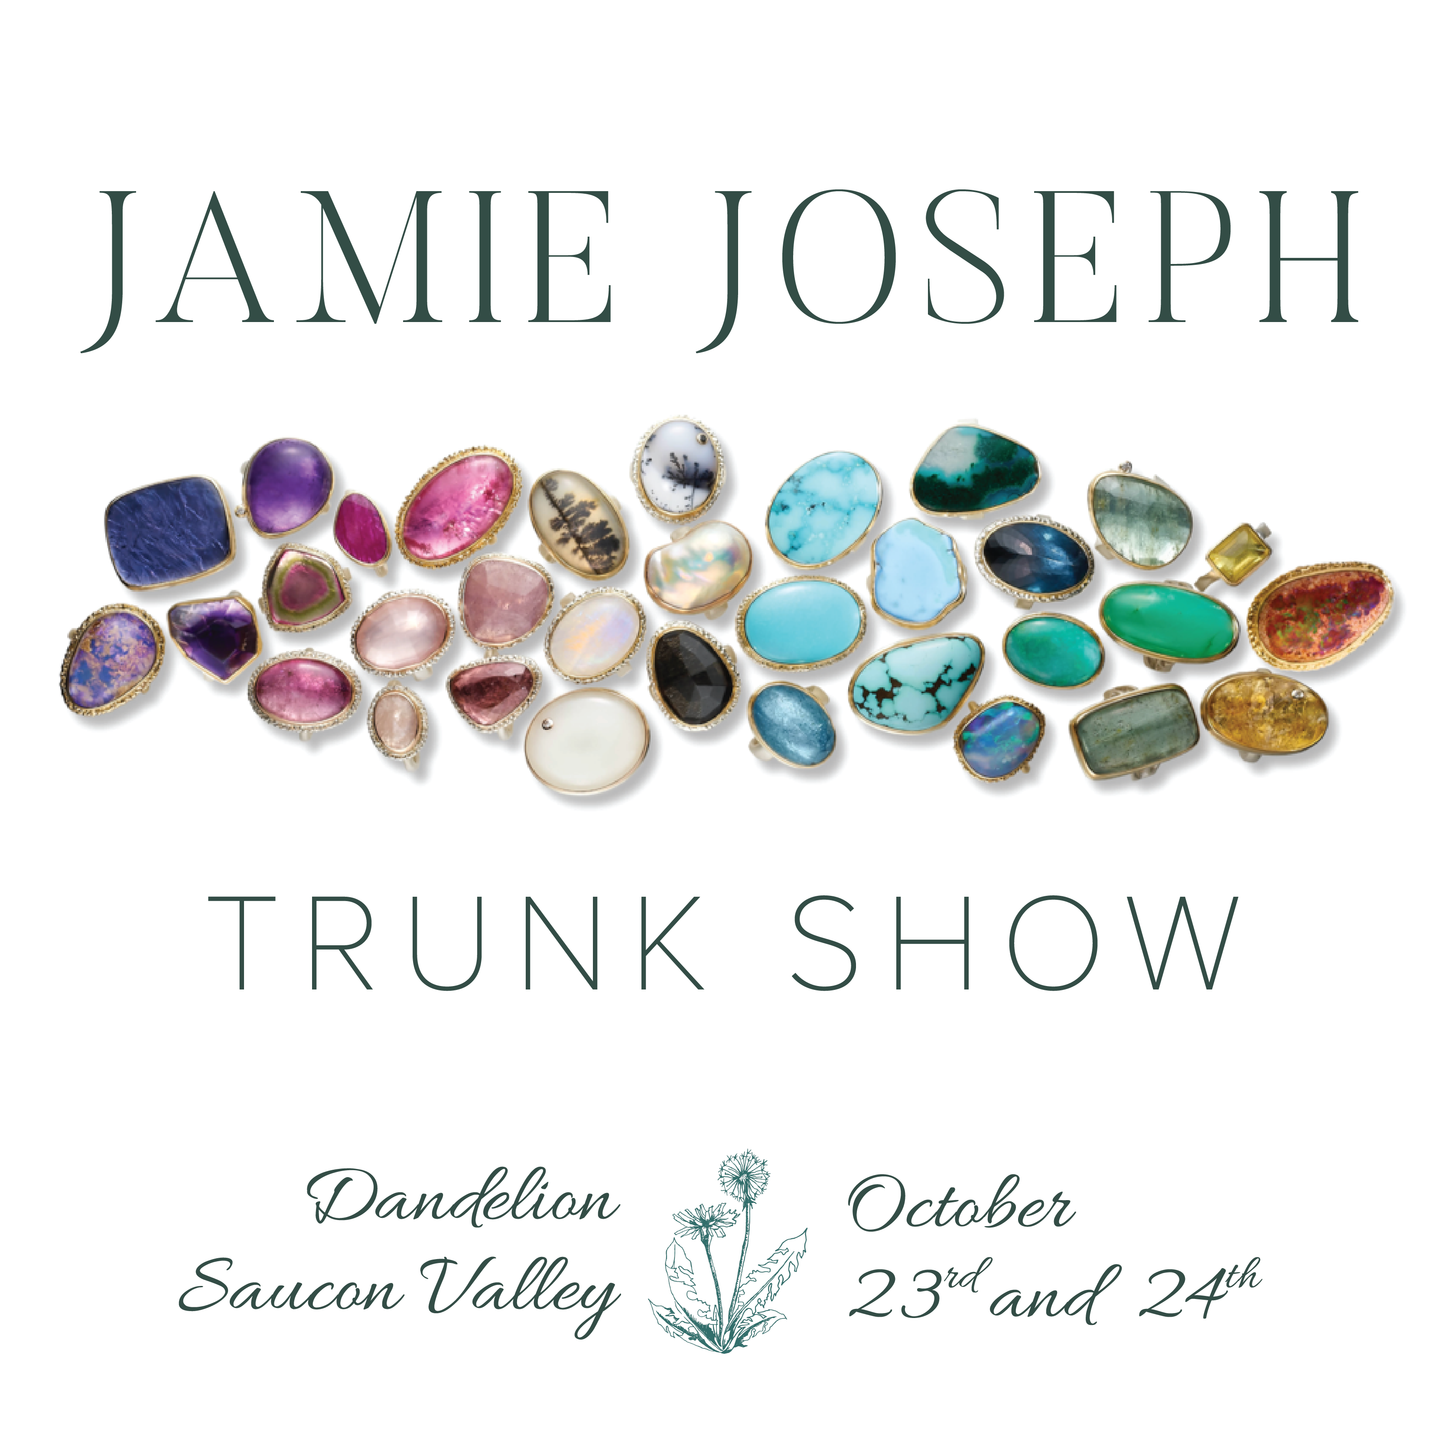 Jamie Joseph Trunk Show in Saucon Valley